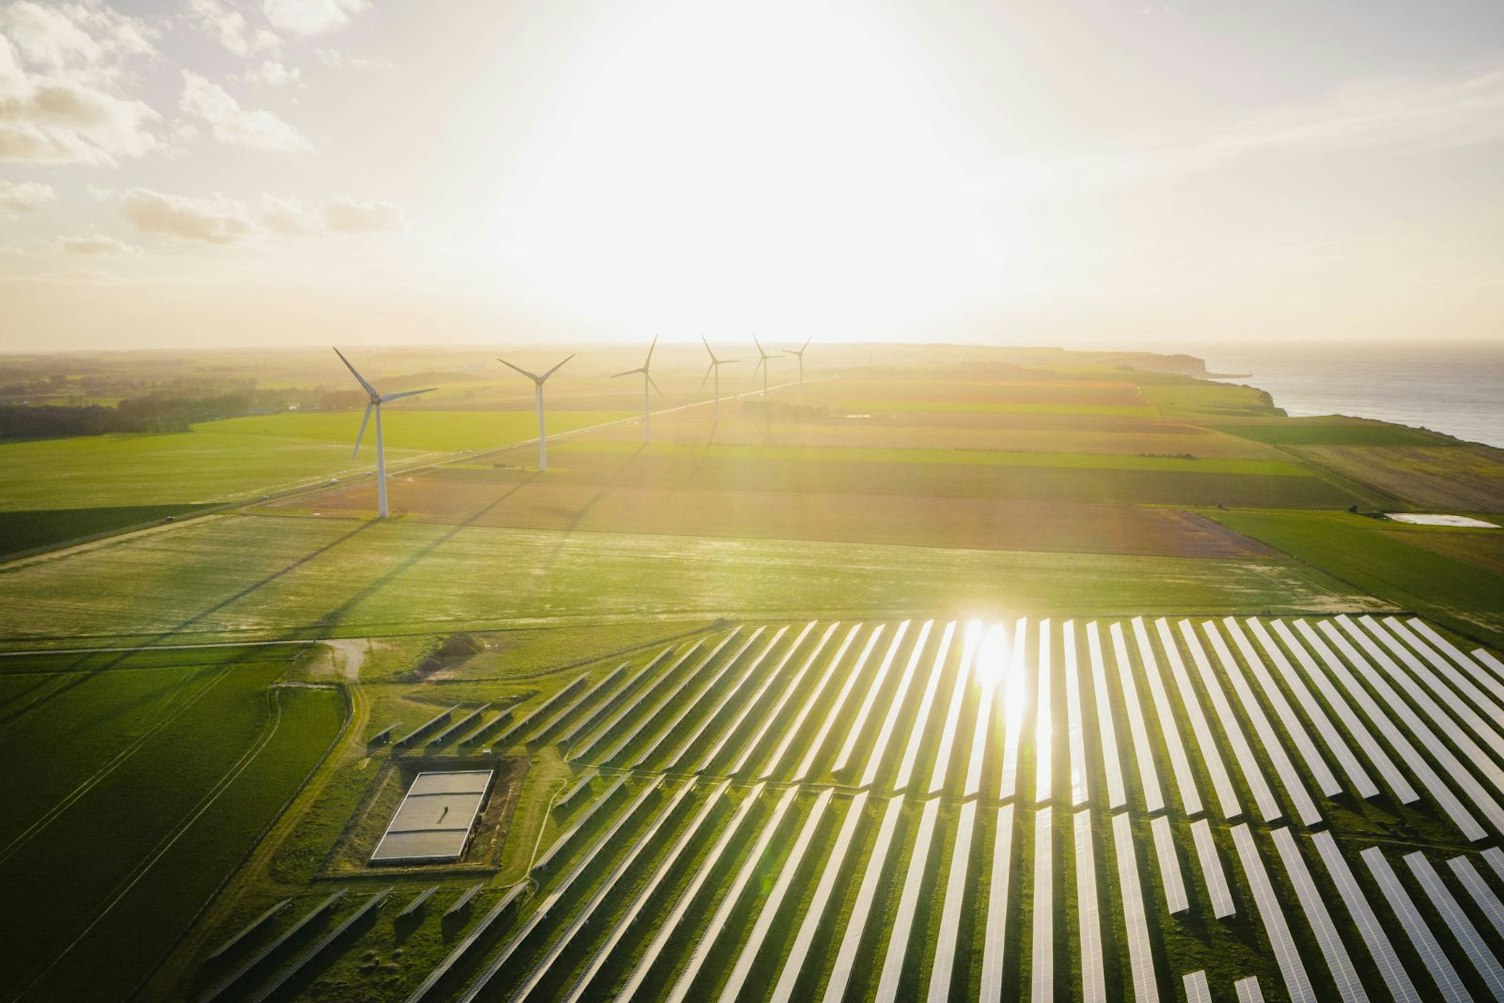 Wind Turbines and Solar Panels Farm in a Field